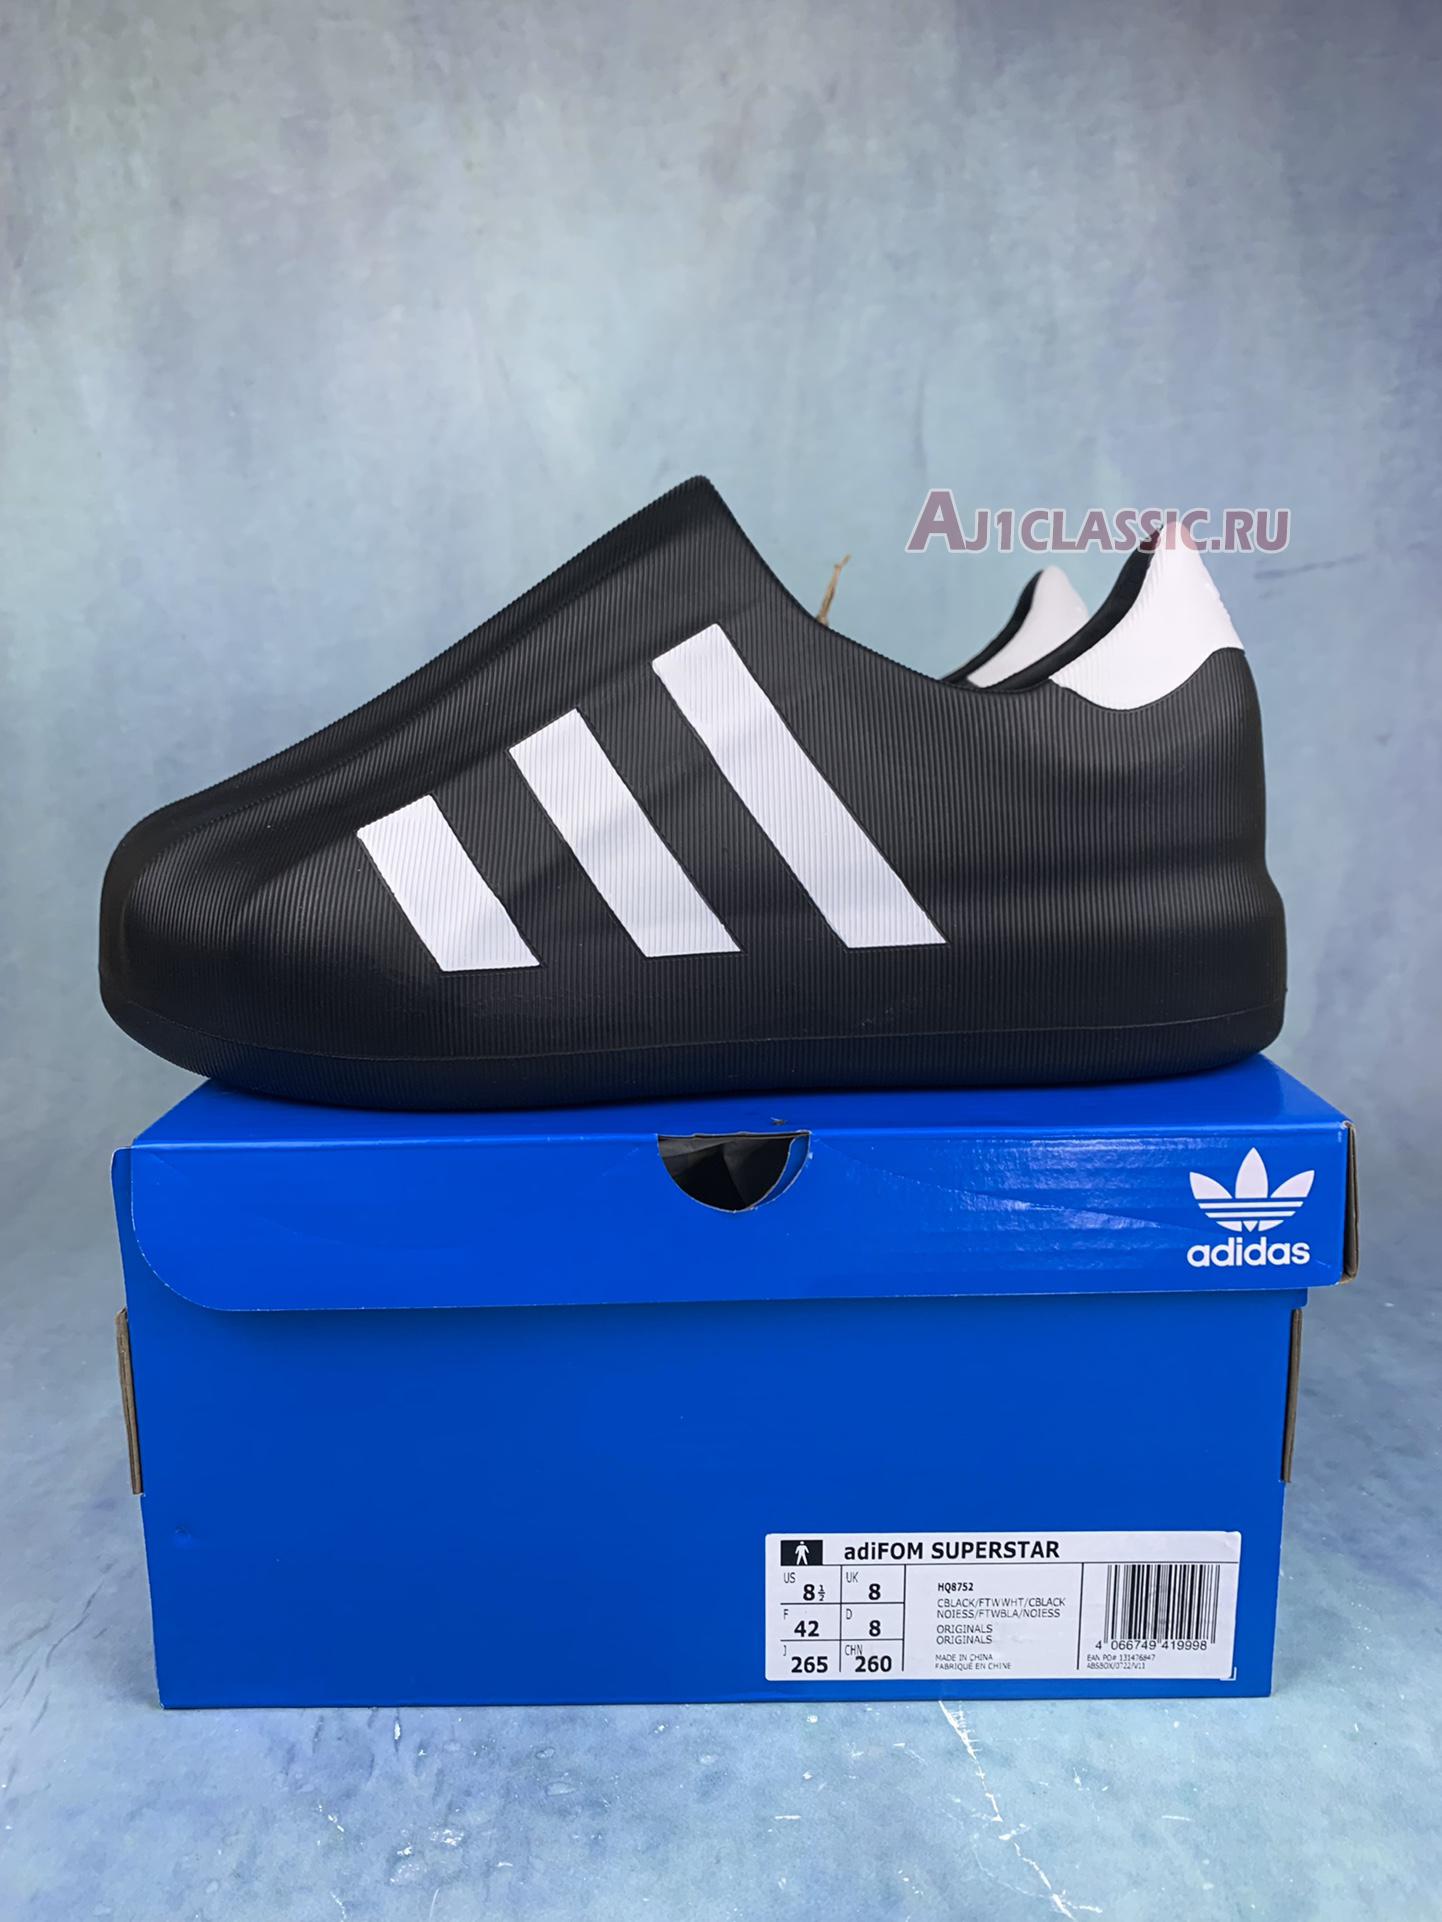 Adidas adiFOM Superstar "Core Black" HQ8752